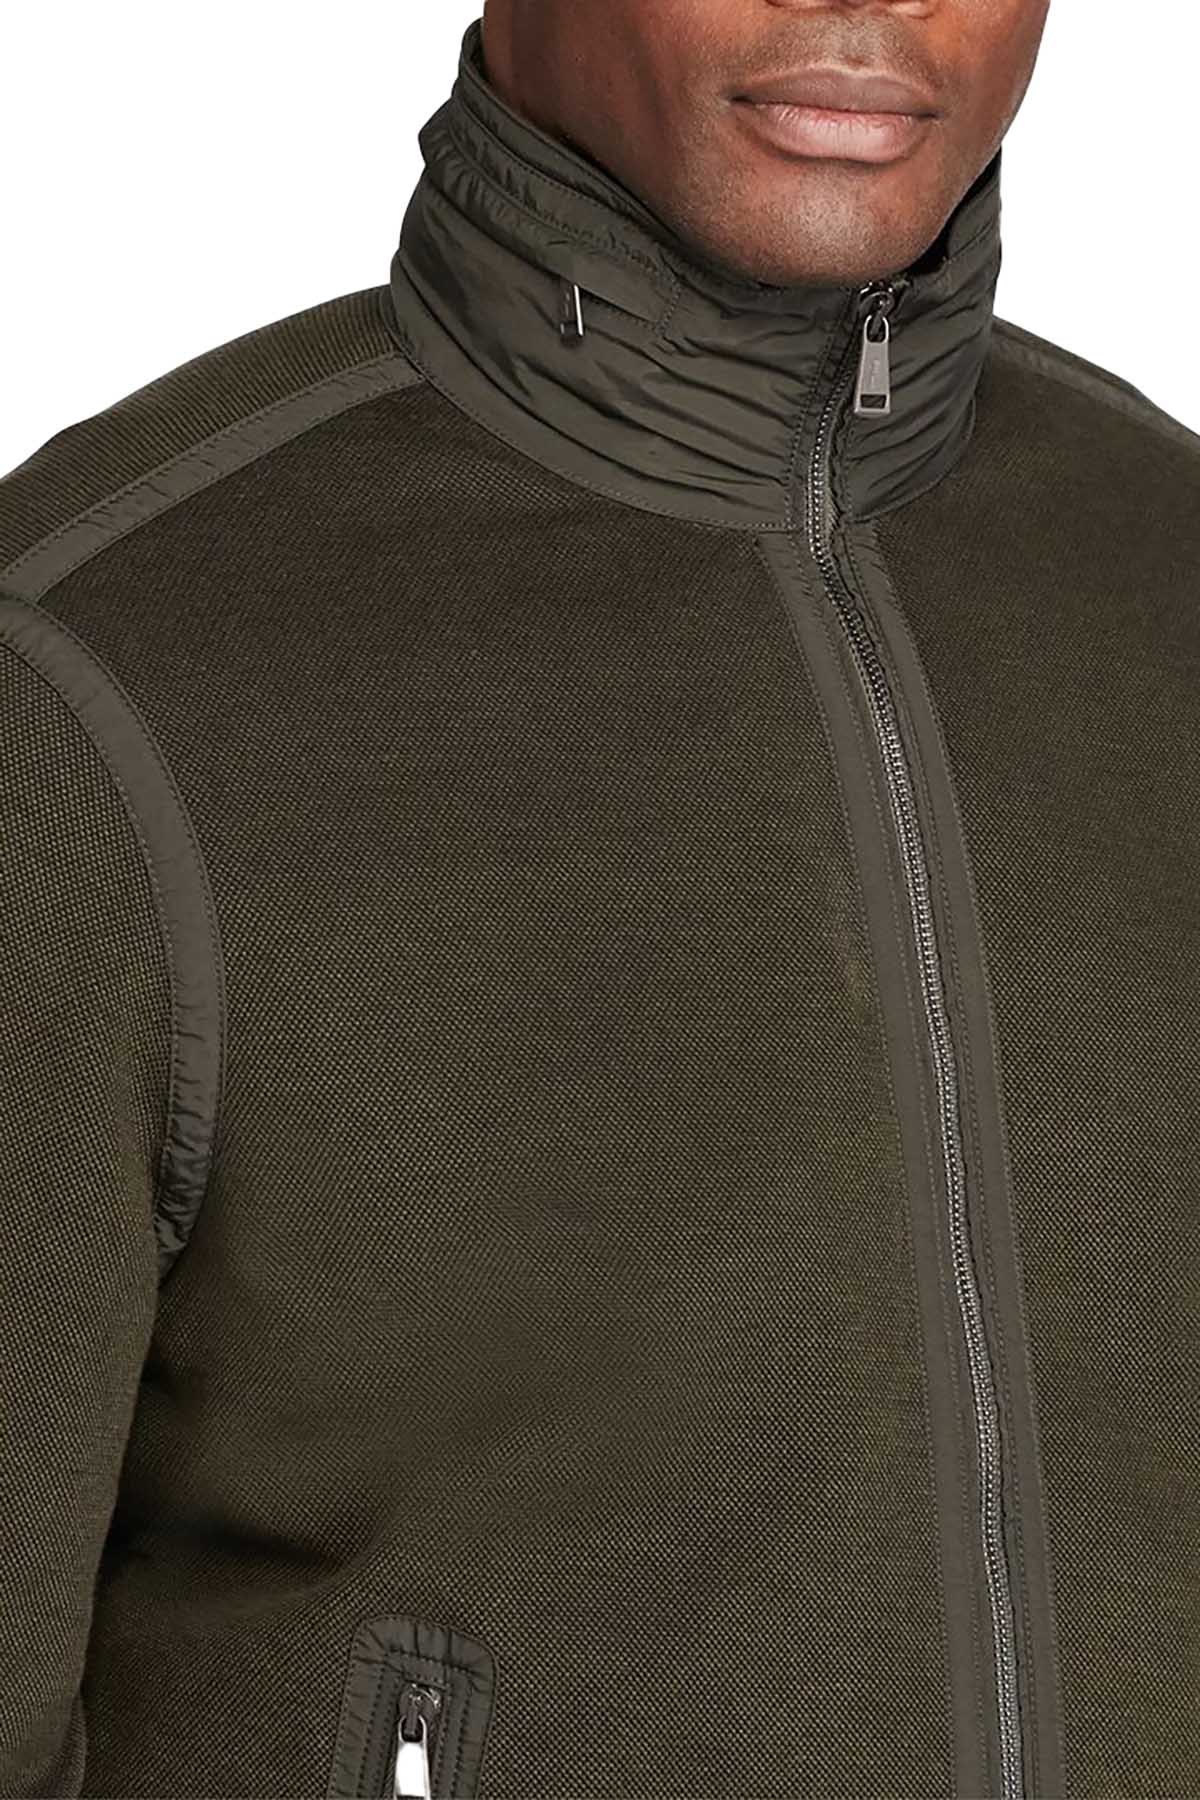 Polo Ralph Lauren Olive Green Big/Tall Full Zip Hooded Jacket | CheapUndies